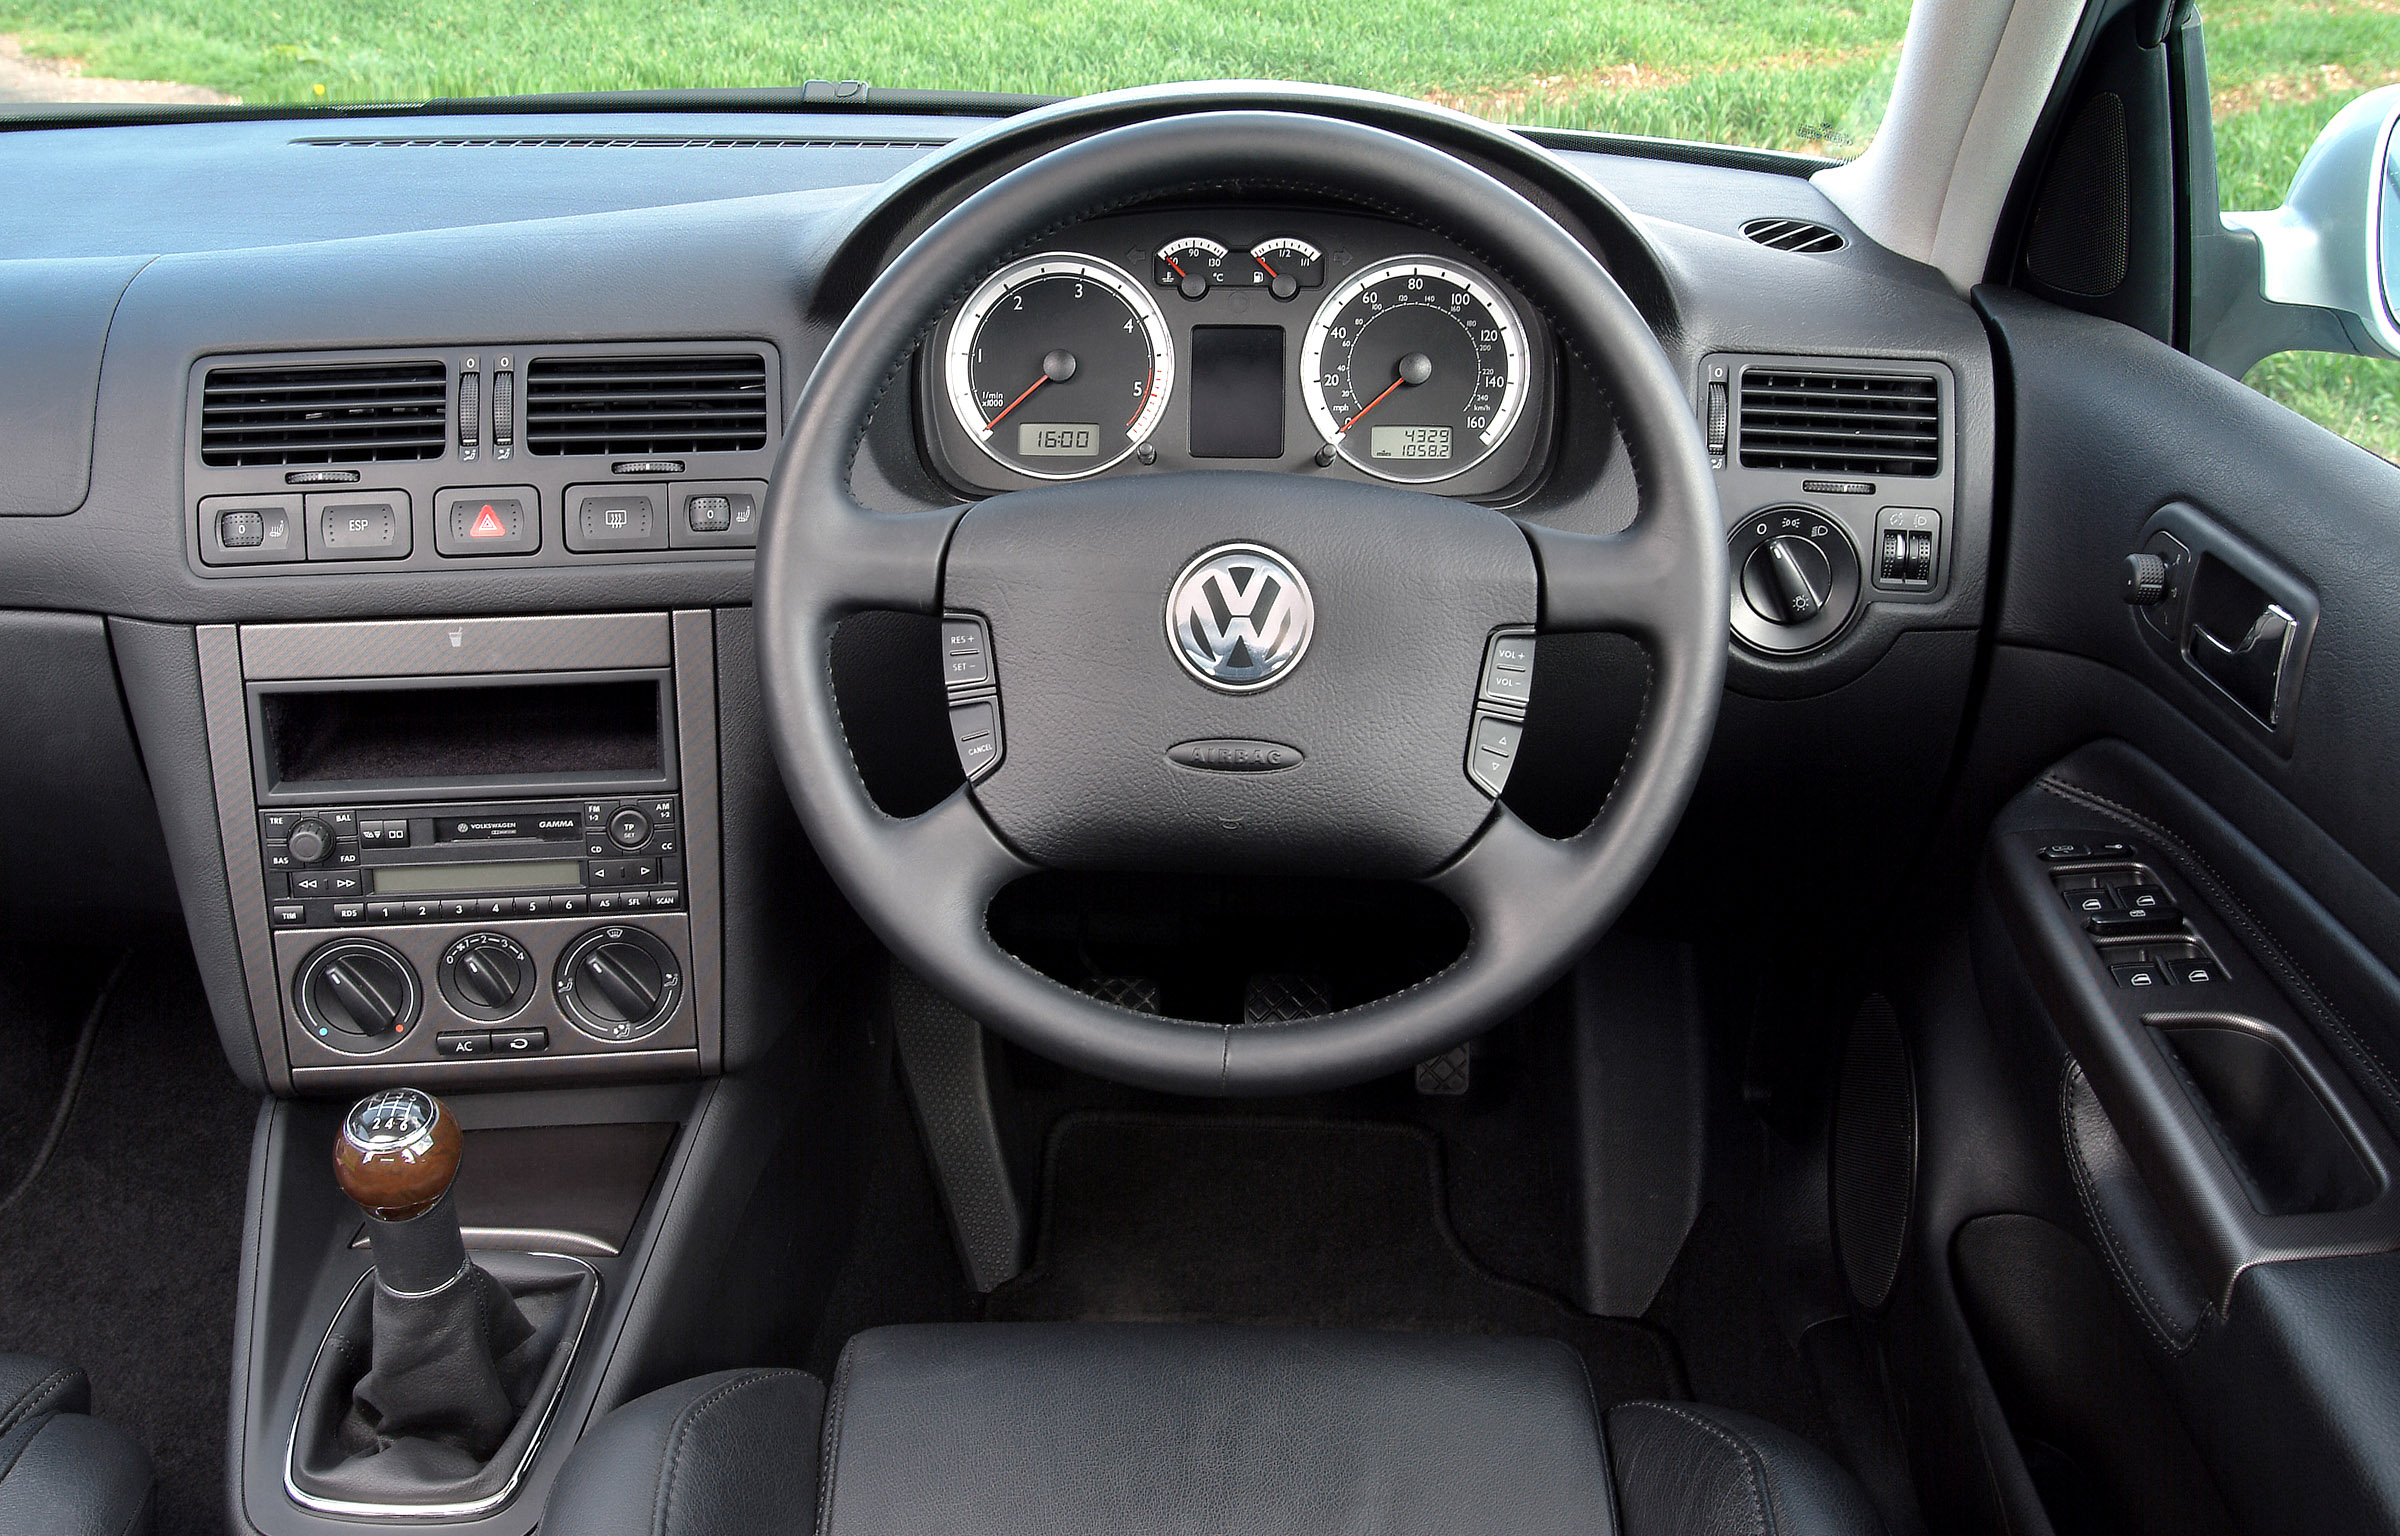 Volkswagen bora 1. Фольксваген Бора 1.6 2005. Фольксваген Бора 1,6 2001. Фольксваген Бора 2005. Volkswagen Bora 2001 салон.